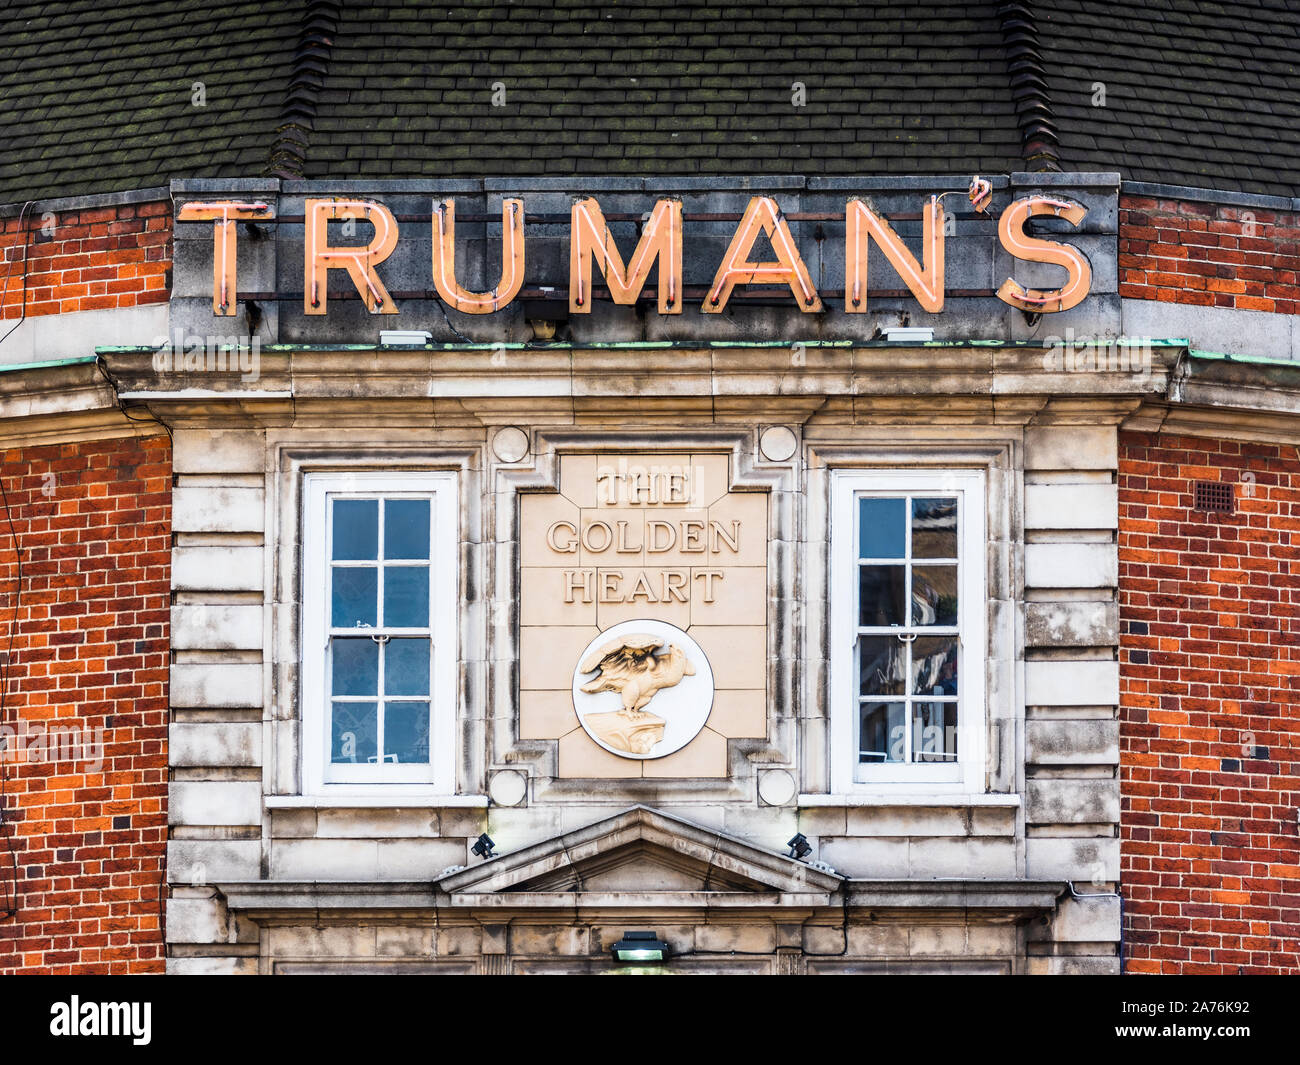 The Golden Heart Truman's Pub in Spitalfields East London Stock Photo